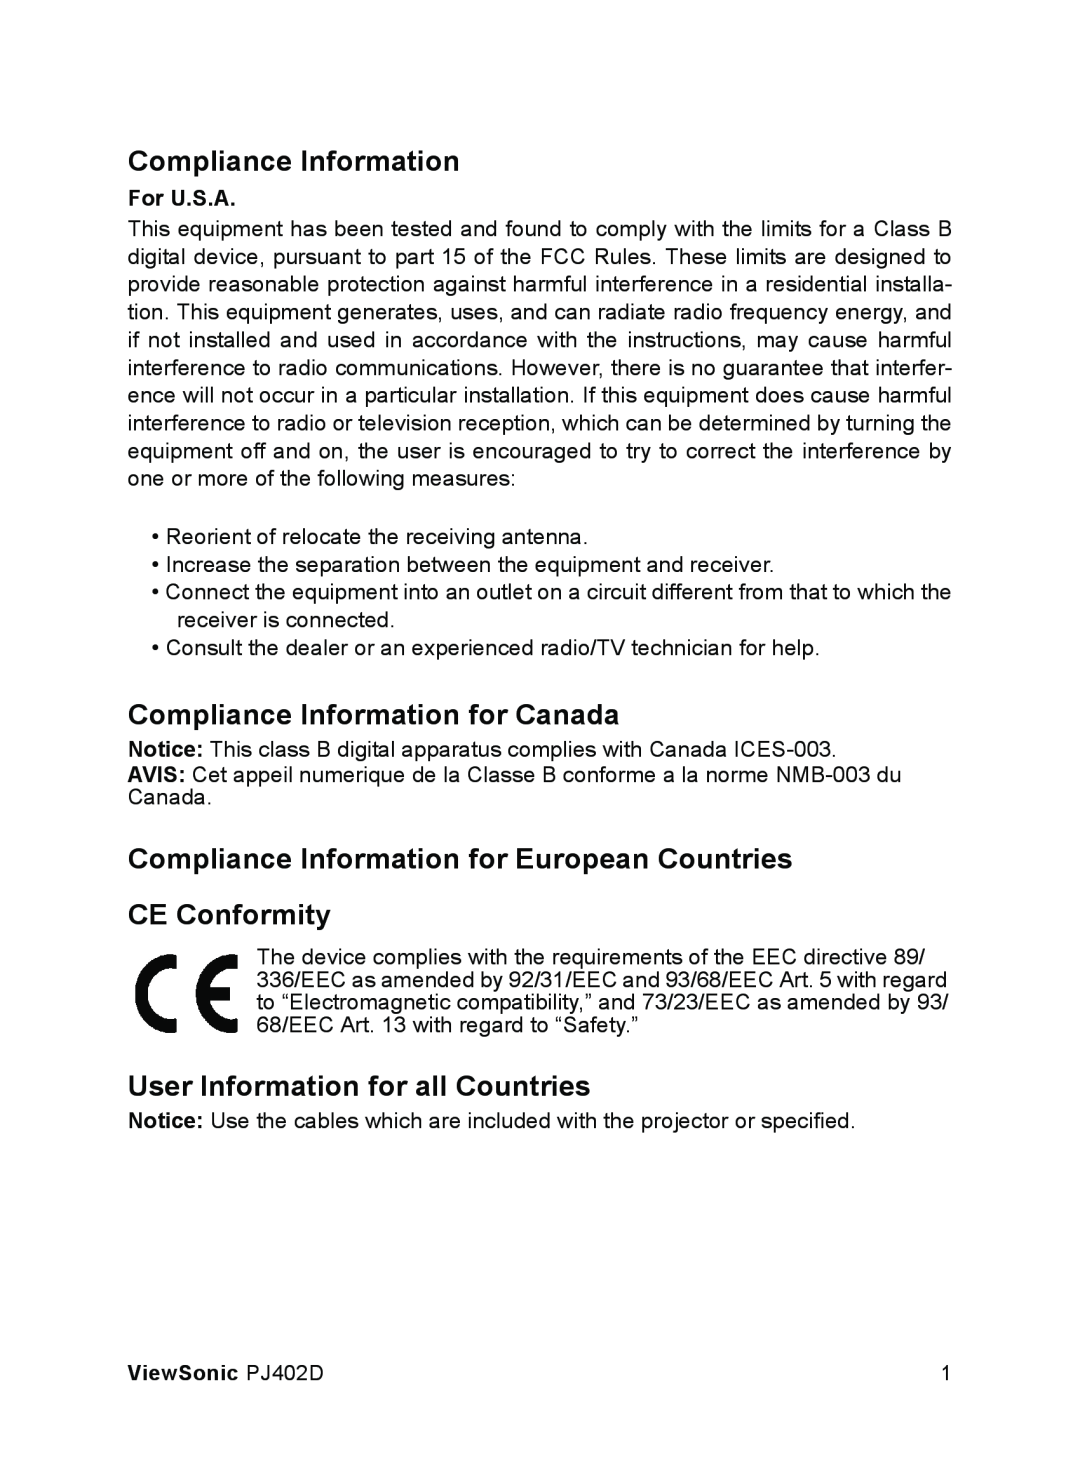 ViewSonic PJ402D manual Compliance Information for Canada, Compliance Information for European Countries CE Conformity 